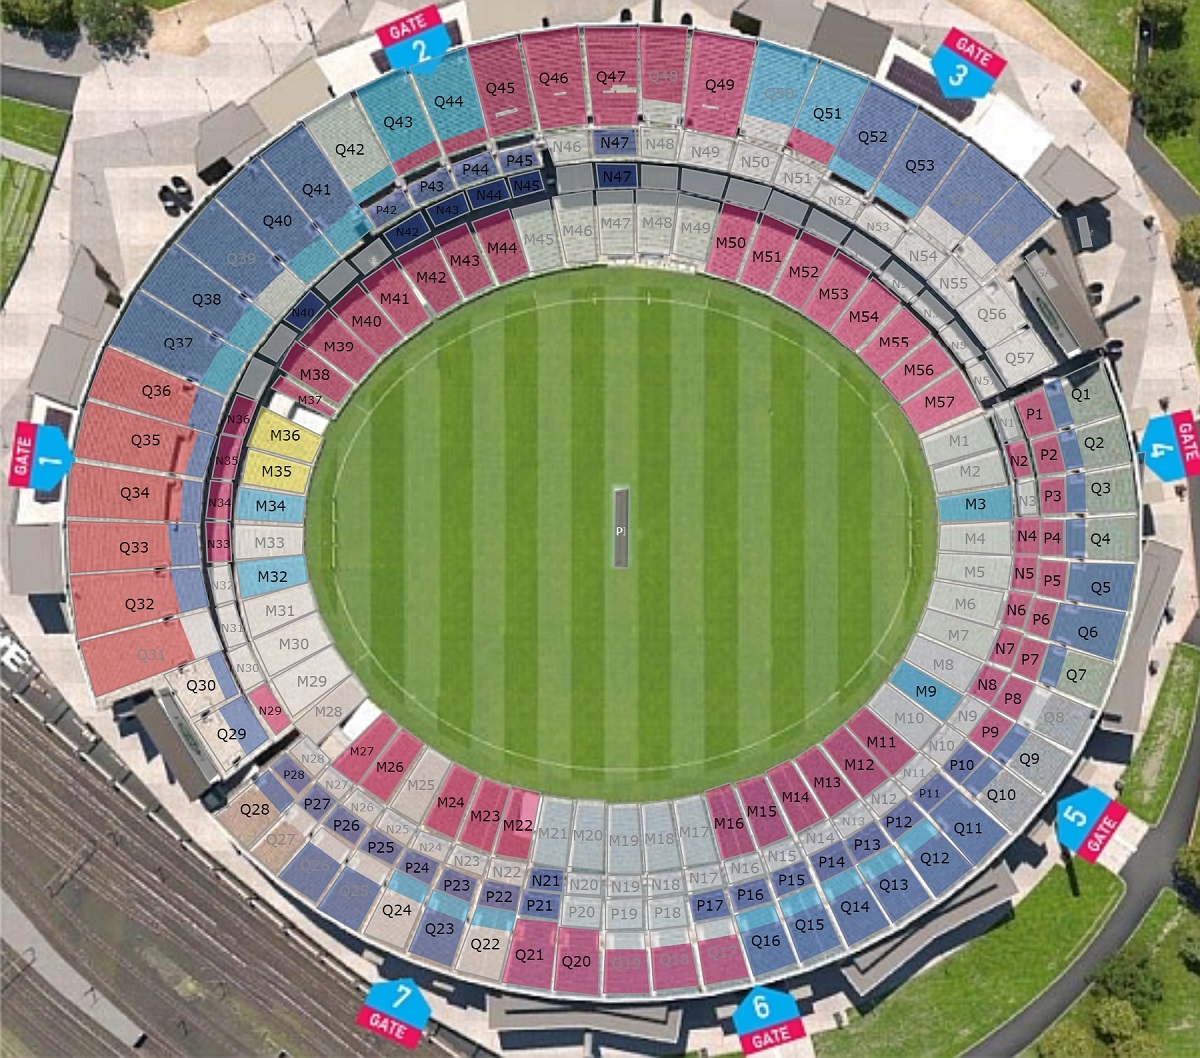 Melbourne Cricket Ground Lions vs Wallabies Venue Seating Plan